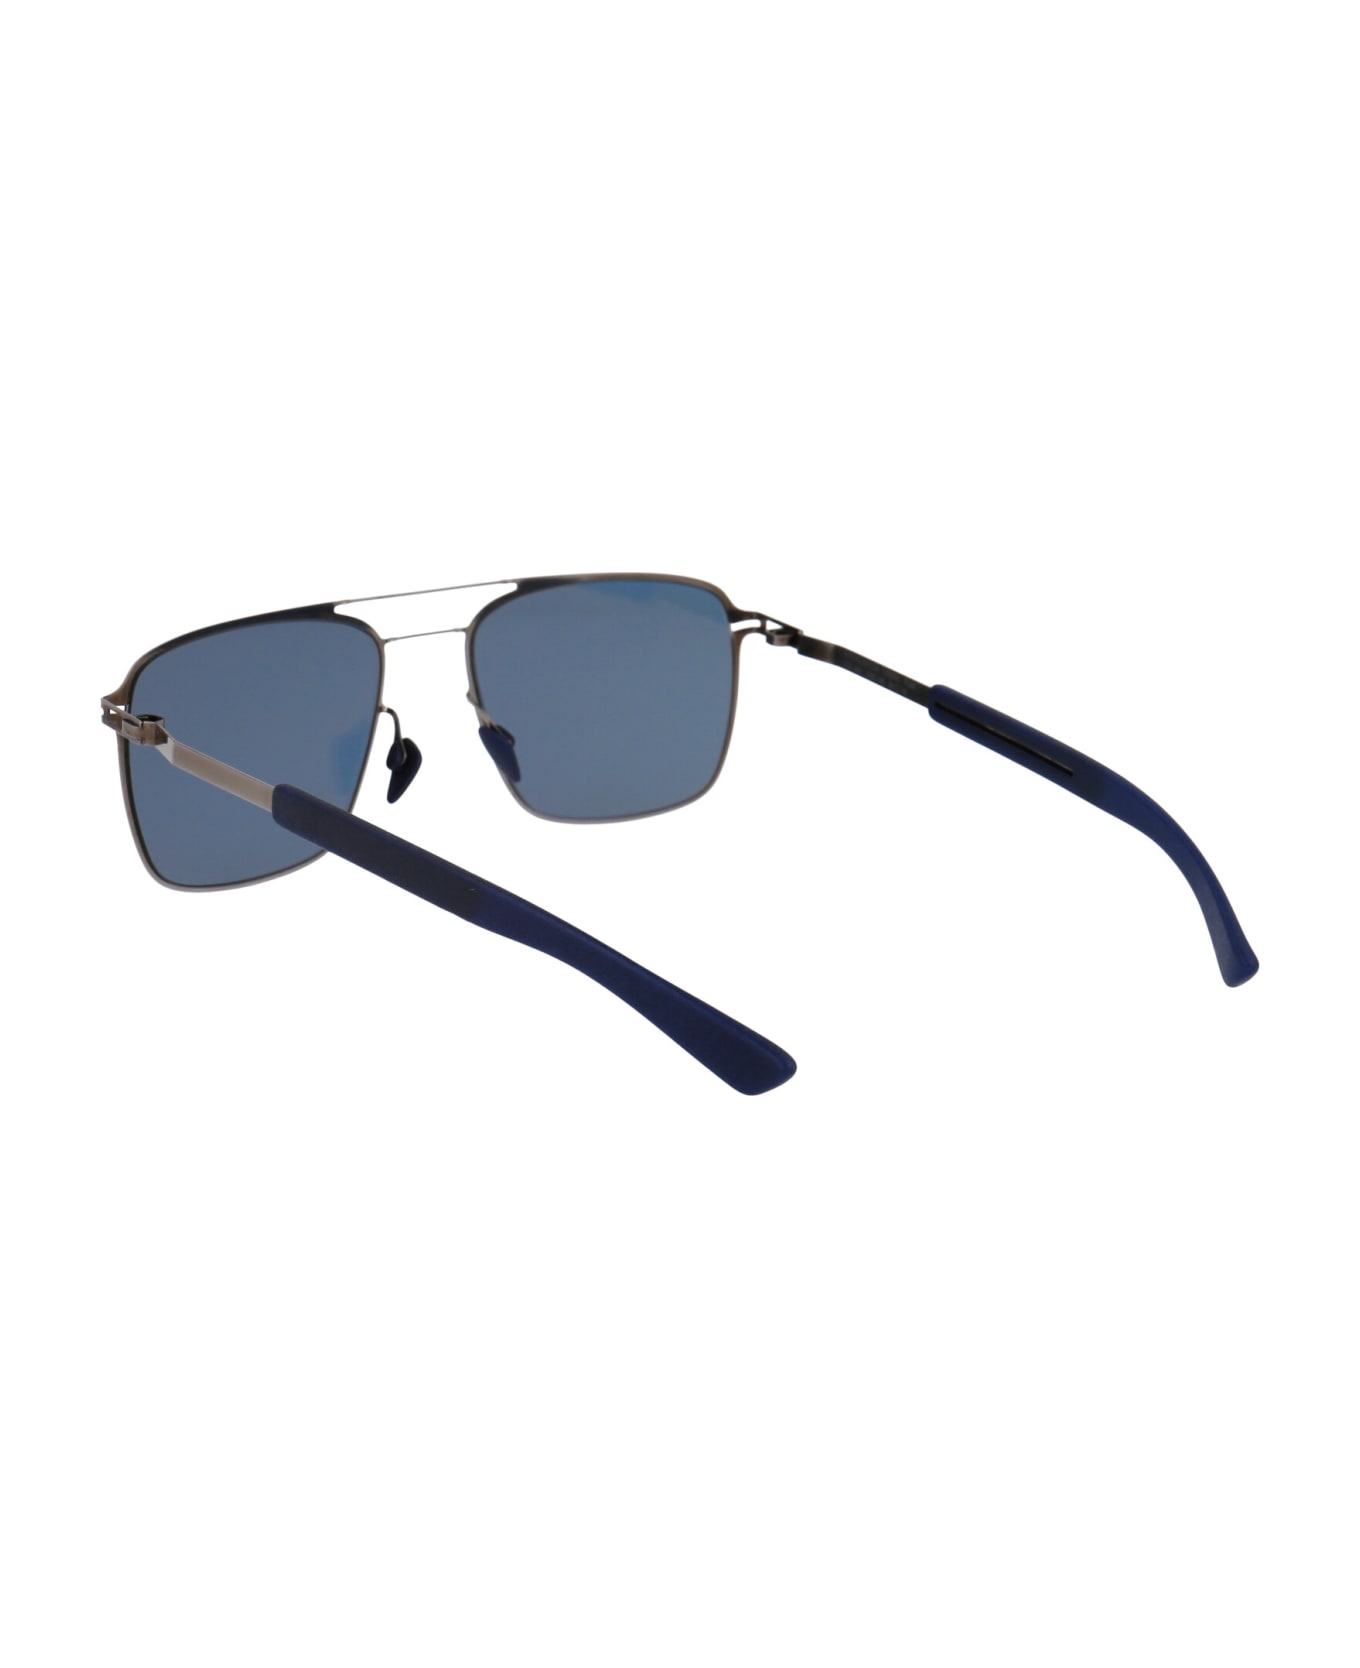 Mykita Flax Sunglasses - 246 MH4 Shiny Graphite/Navy Blue Pearlygold Flash